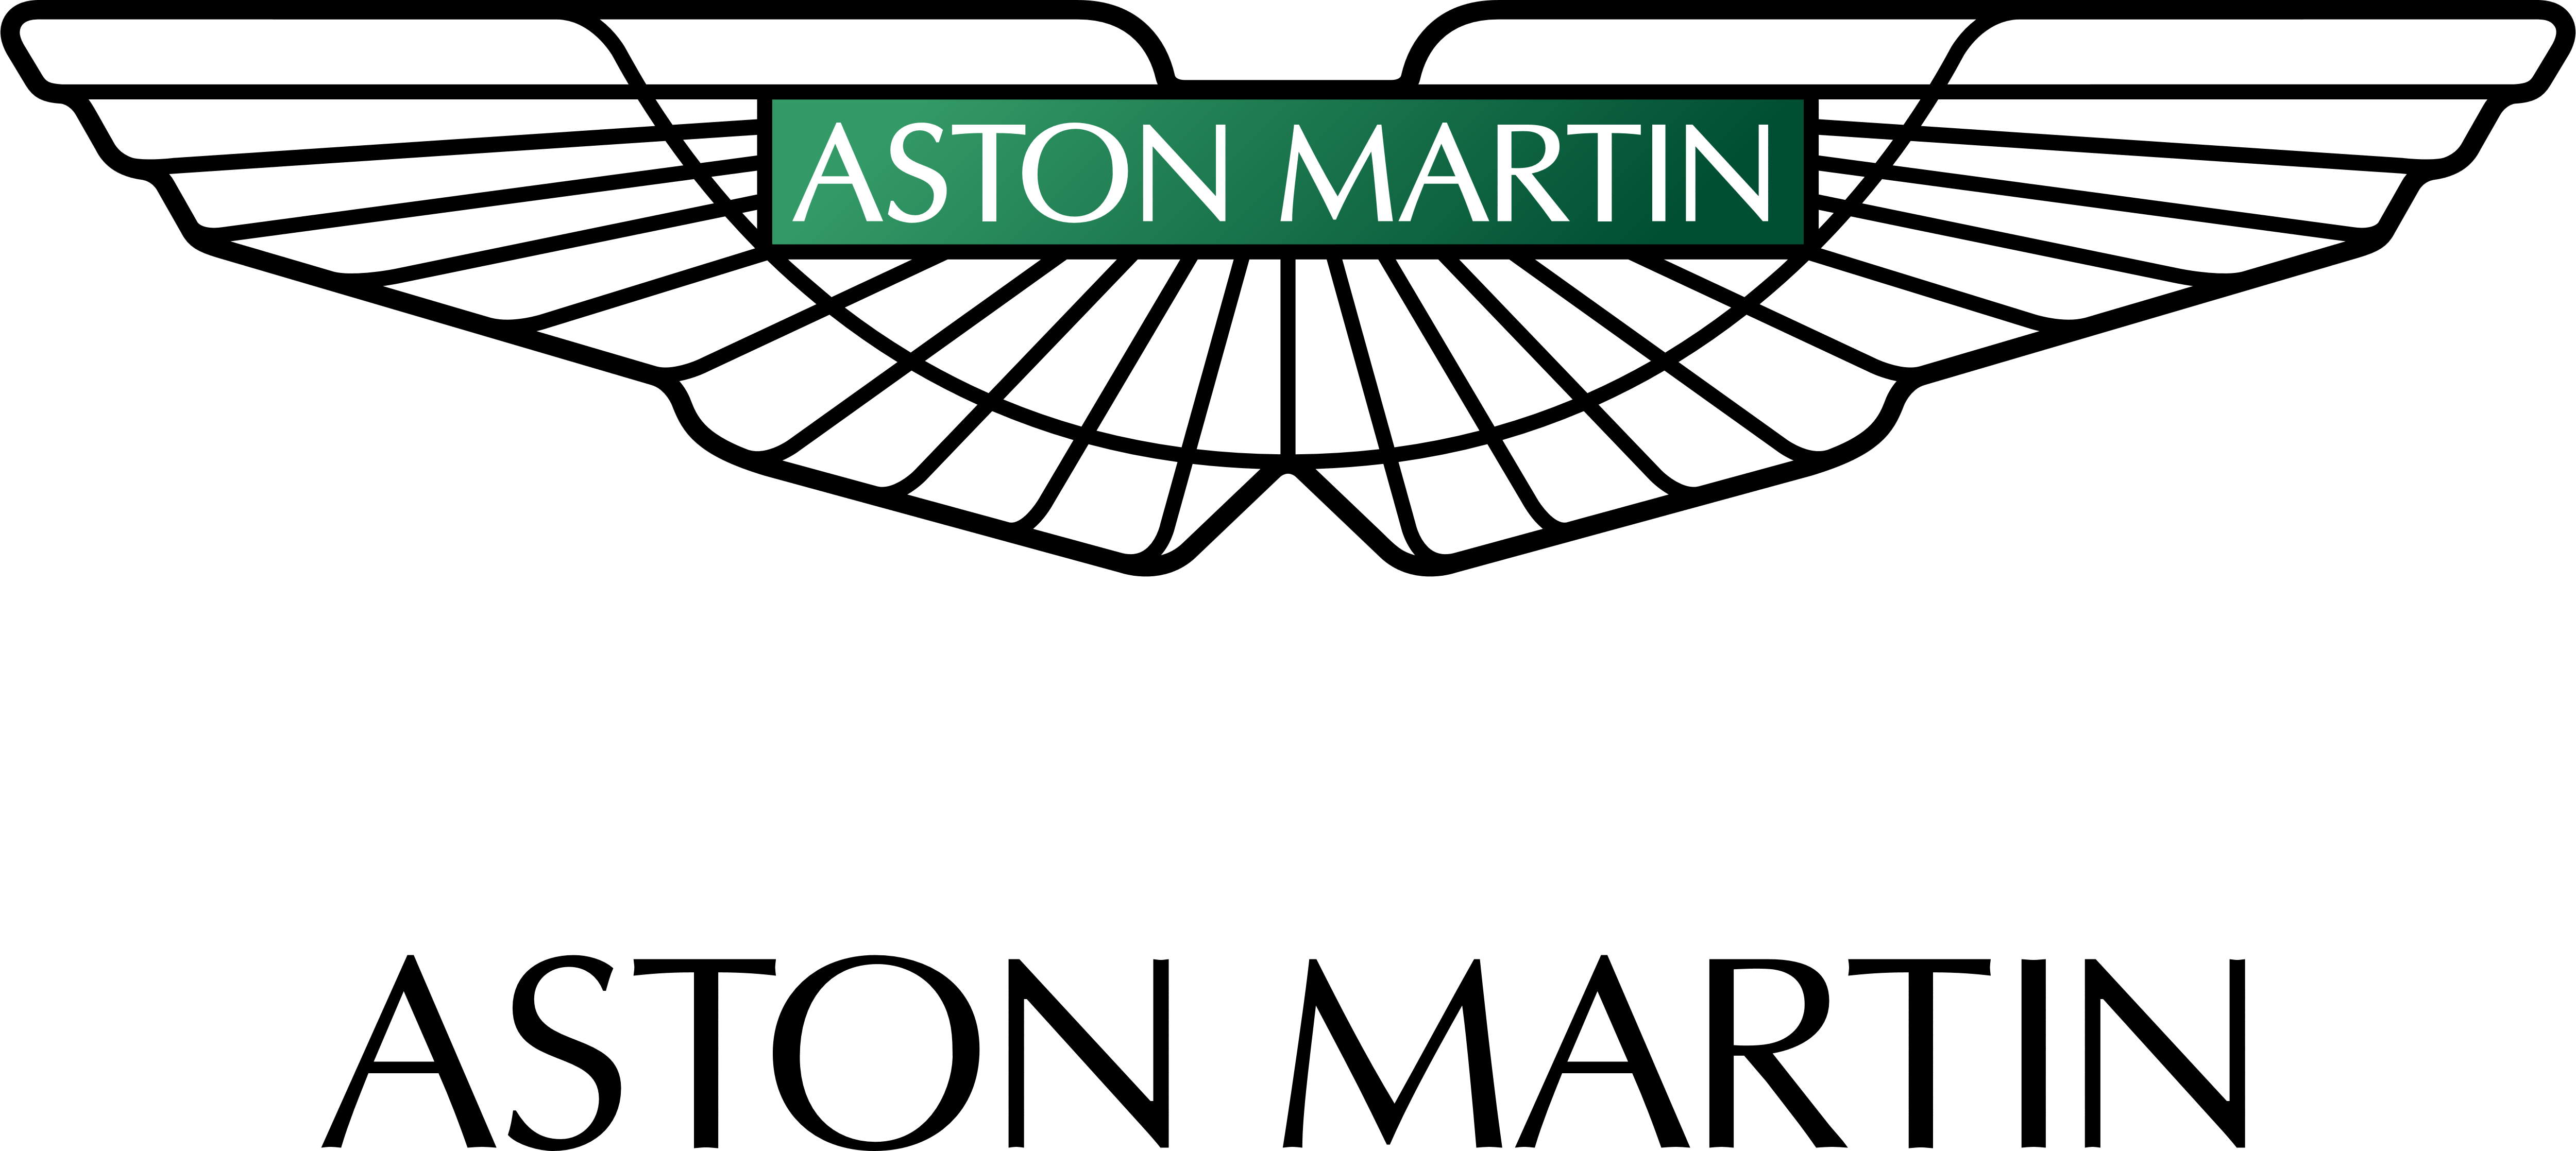 Download Aston Martin Logo - 